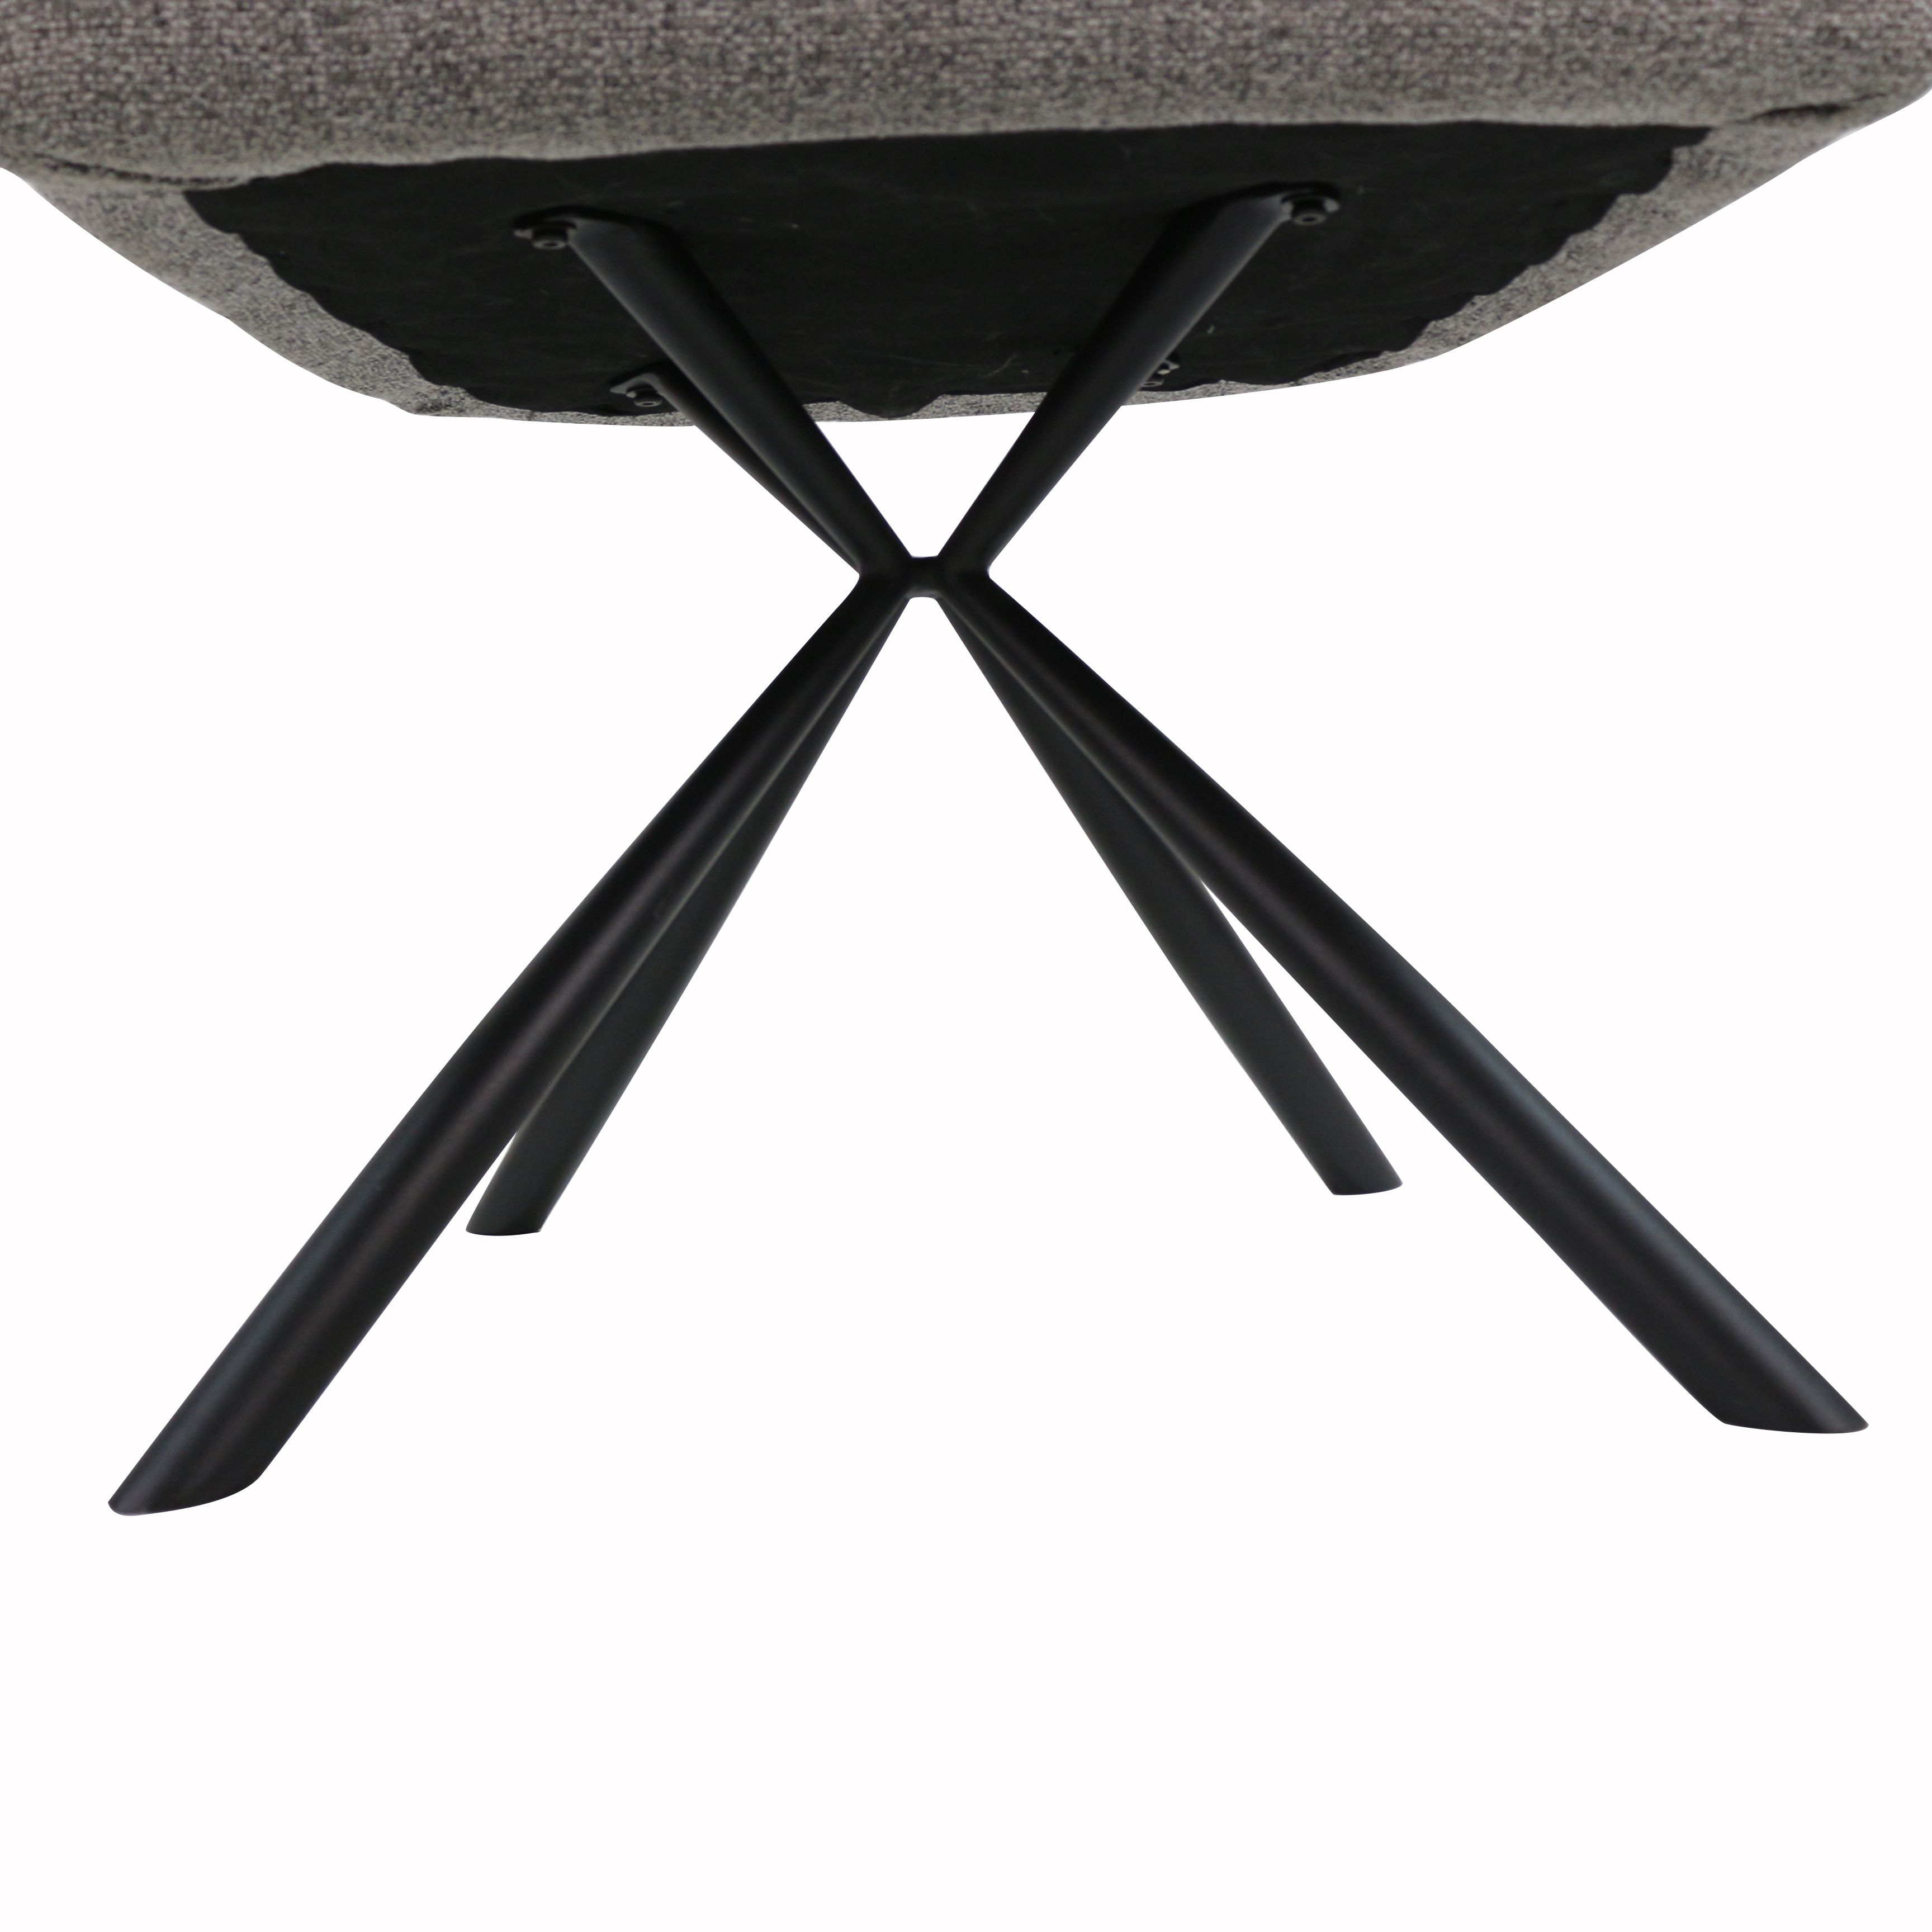 Grey linen Metal Leg Living Chair for dining room or living room